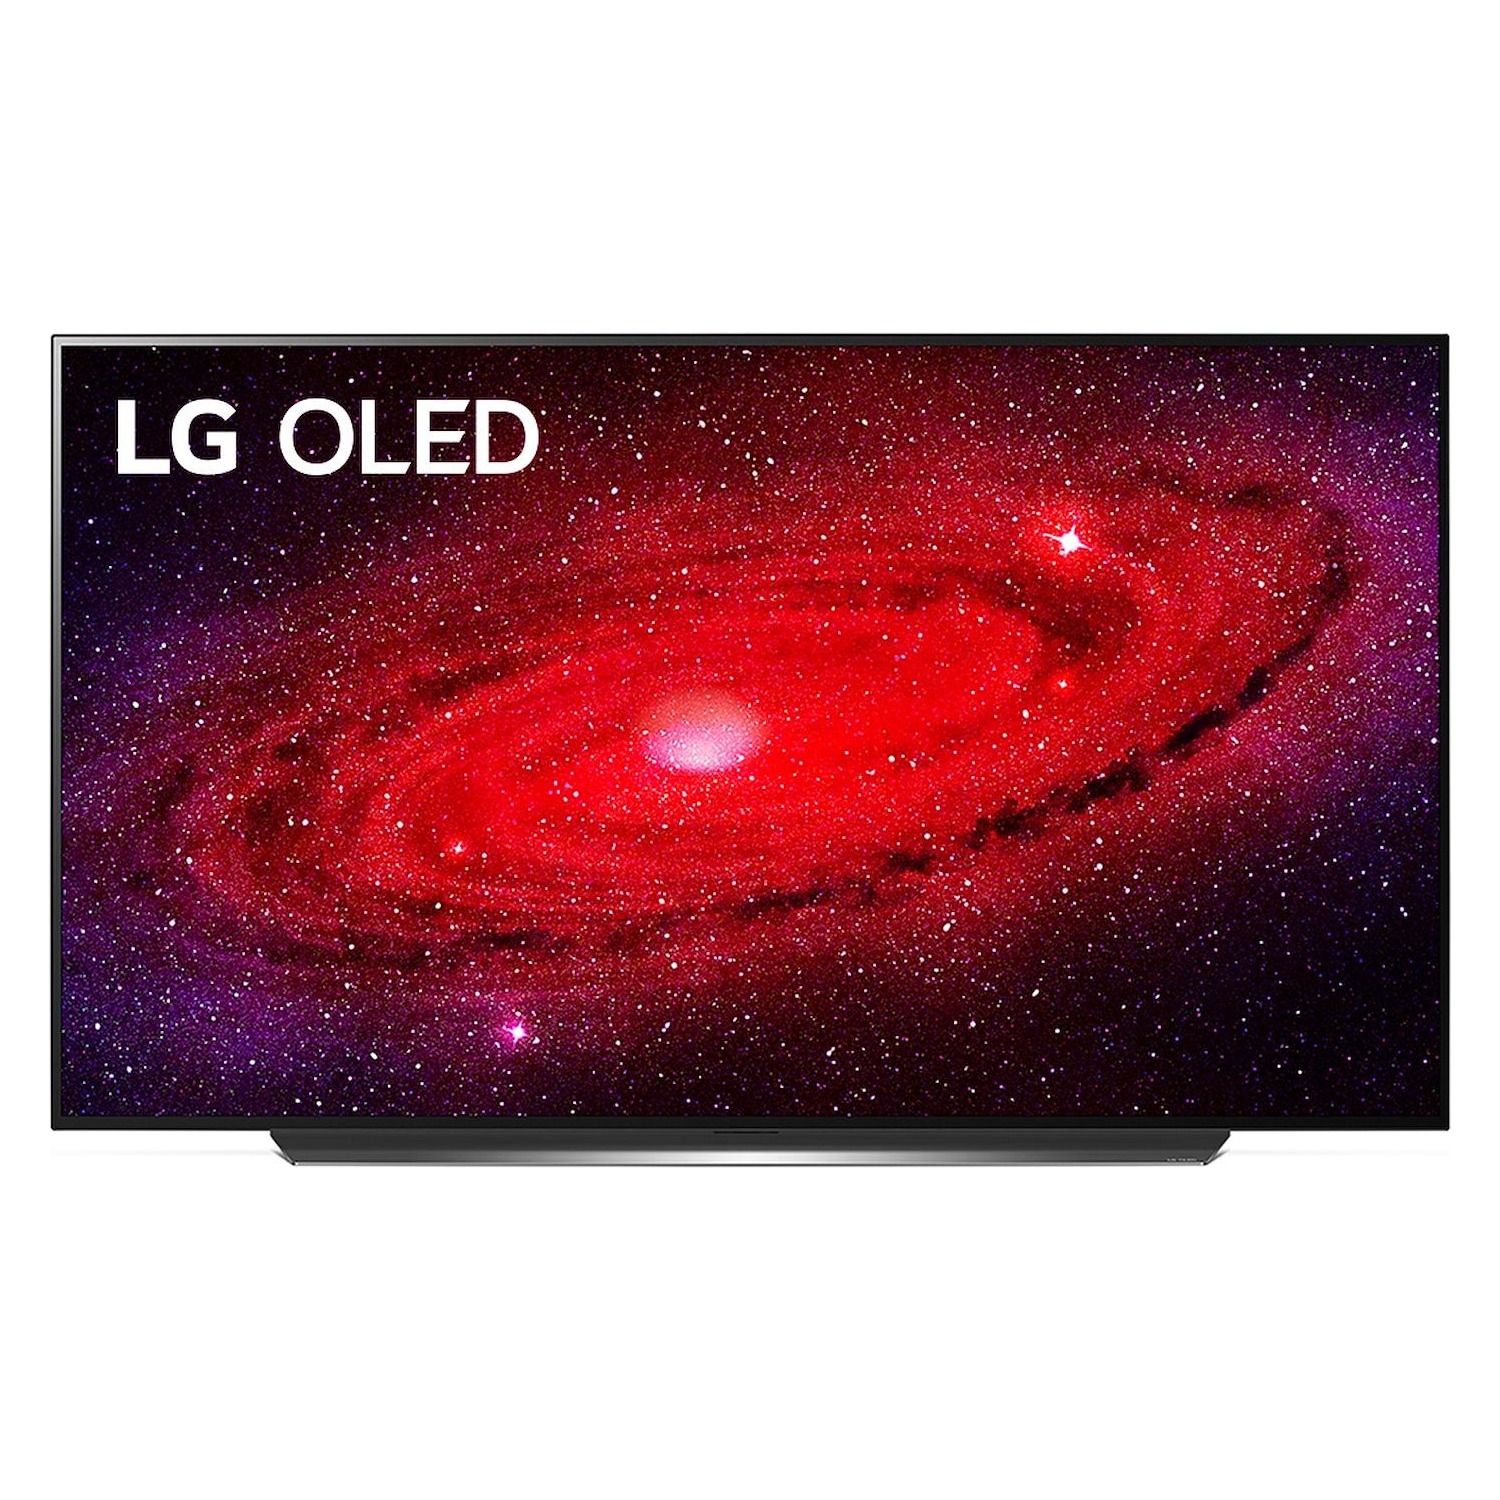 Immagine per TV OLED UHD 4K Smart LG OLED77CX6 da DIMOStore